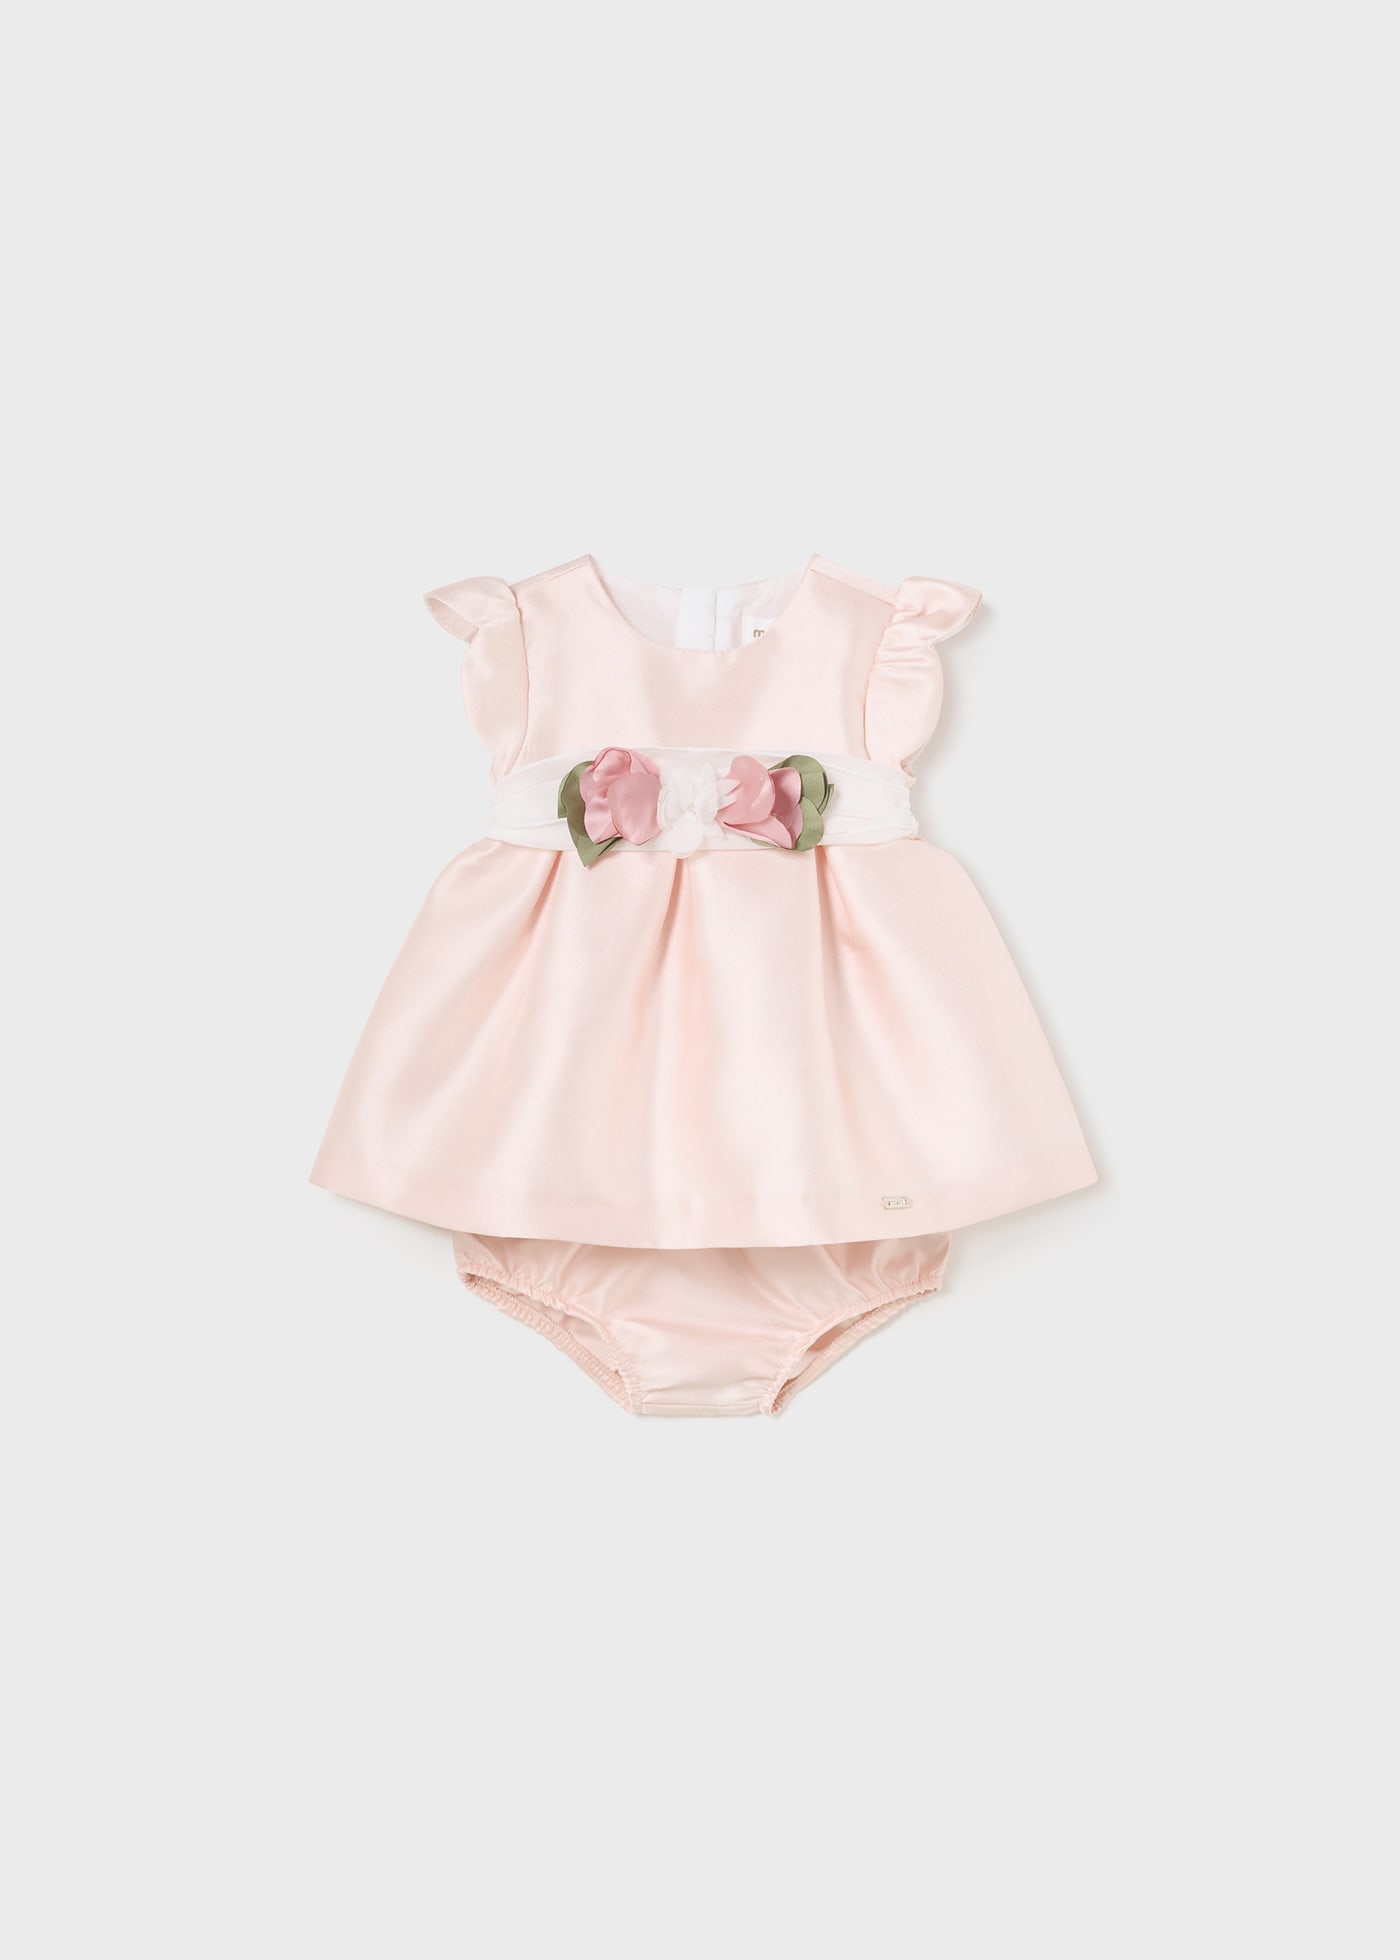 Newborn mikado dress and bloomer set